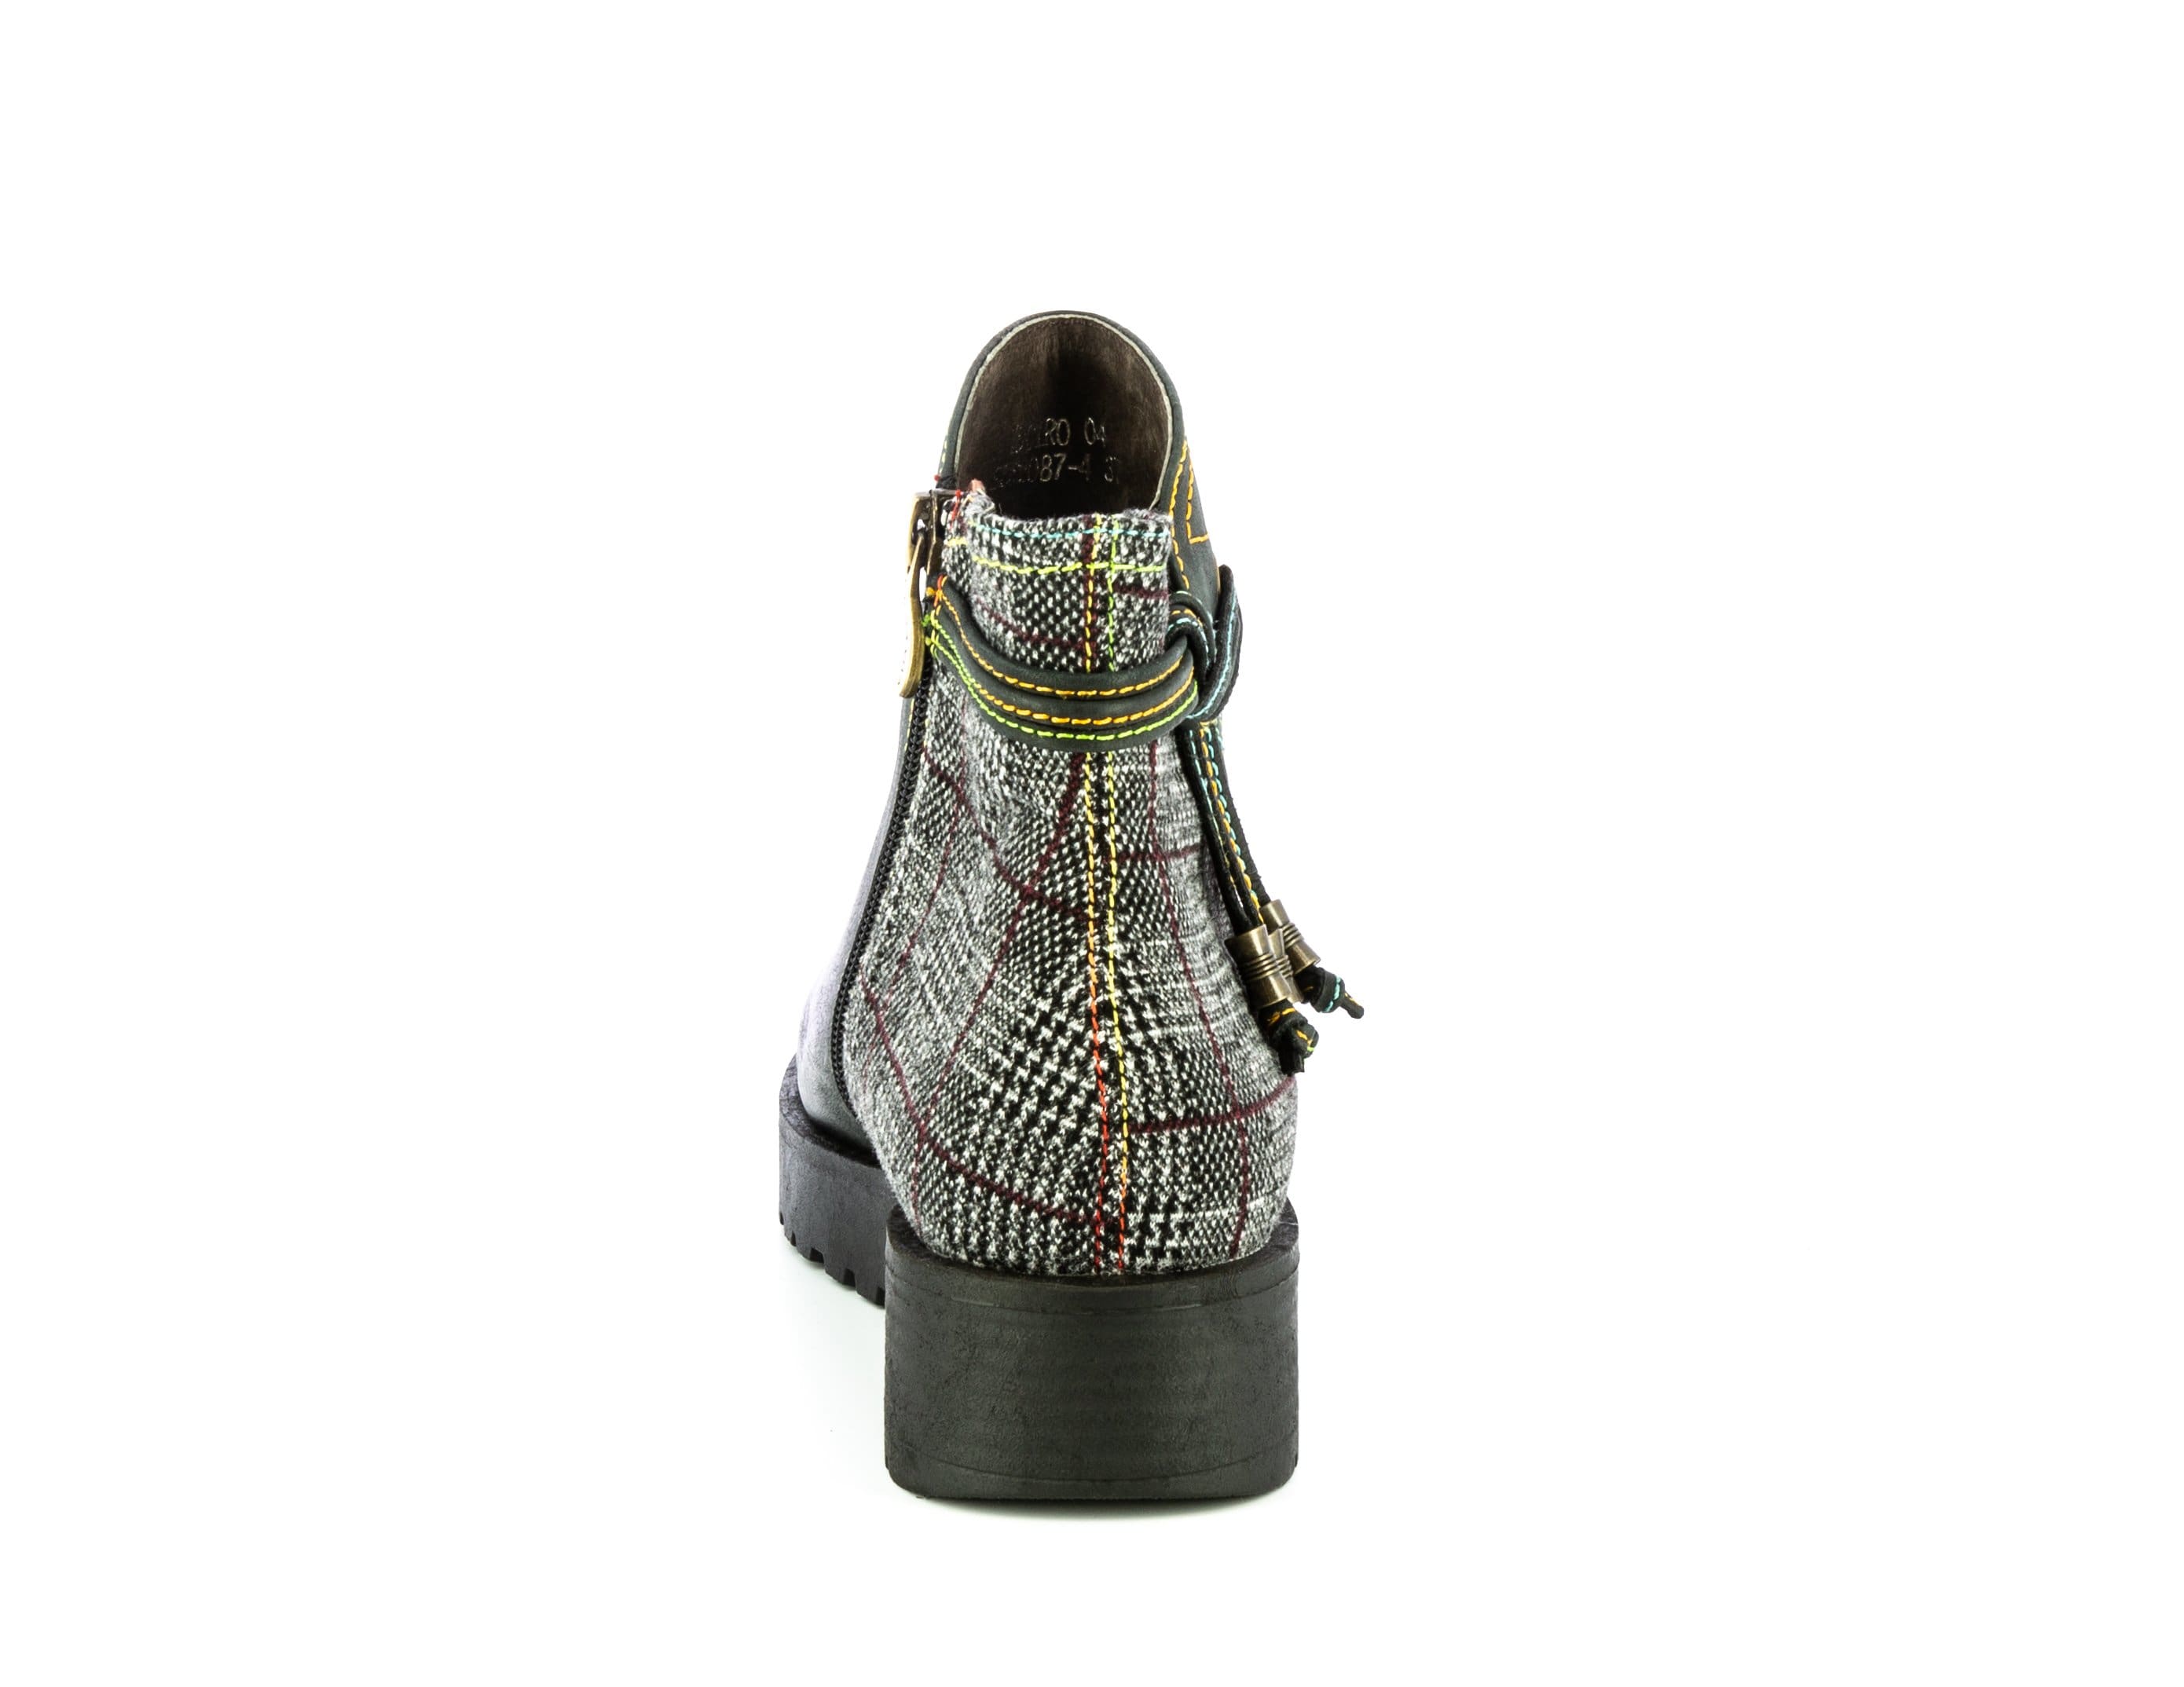 Chaussure IDCIRO 04 - Boots